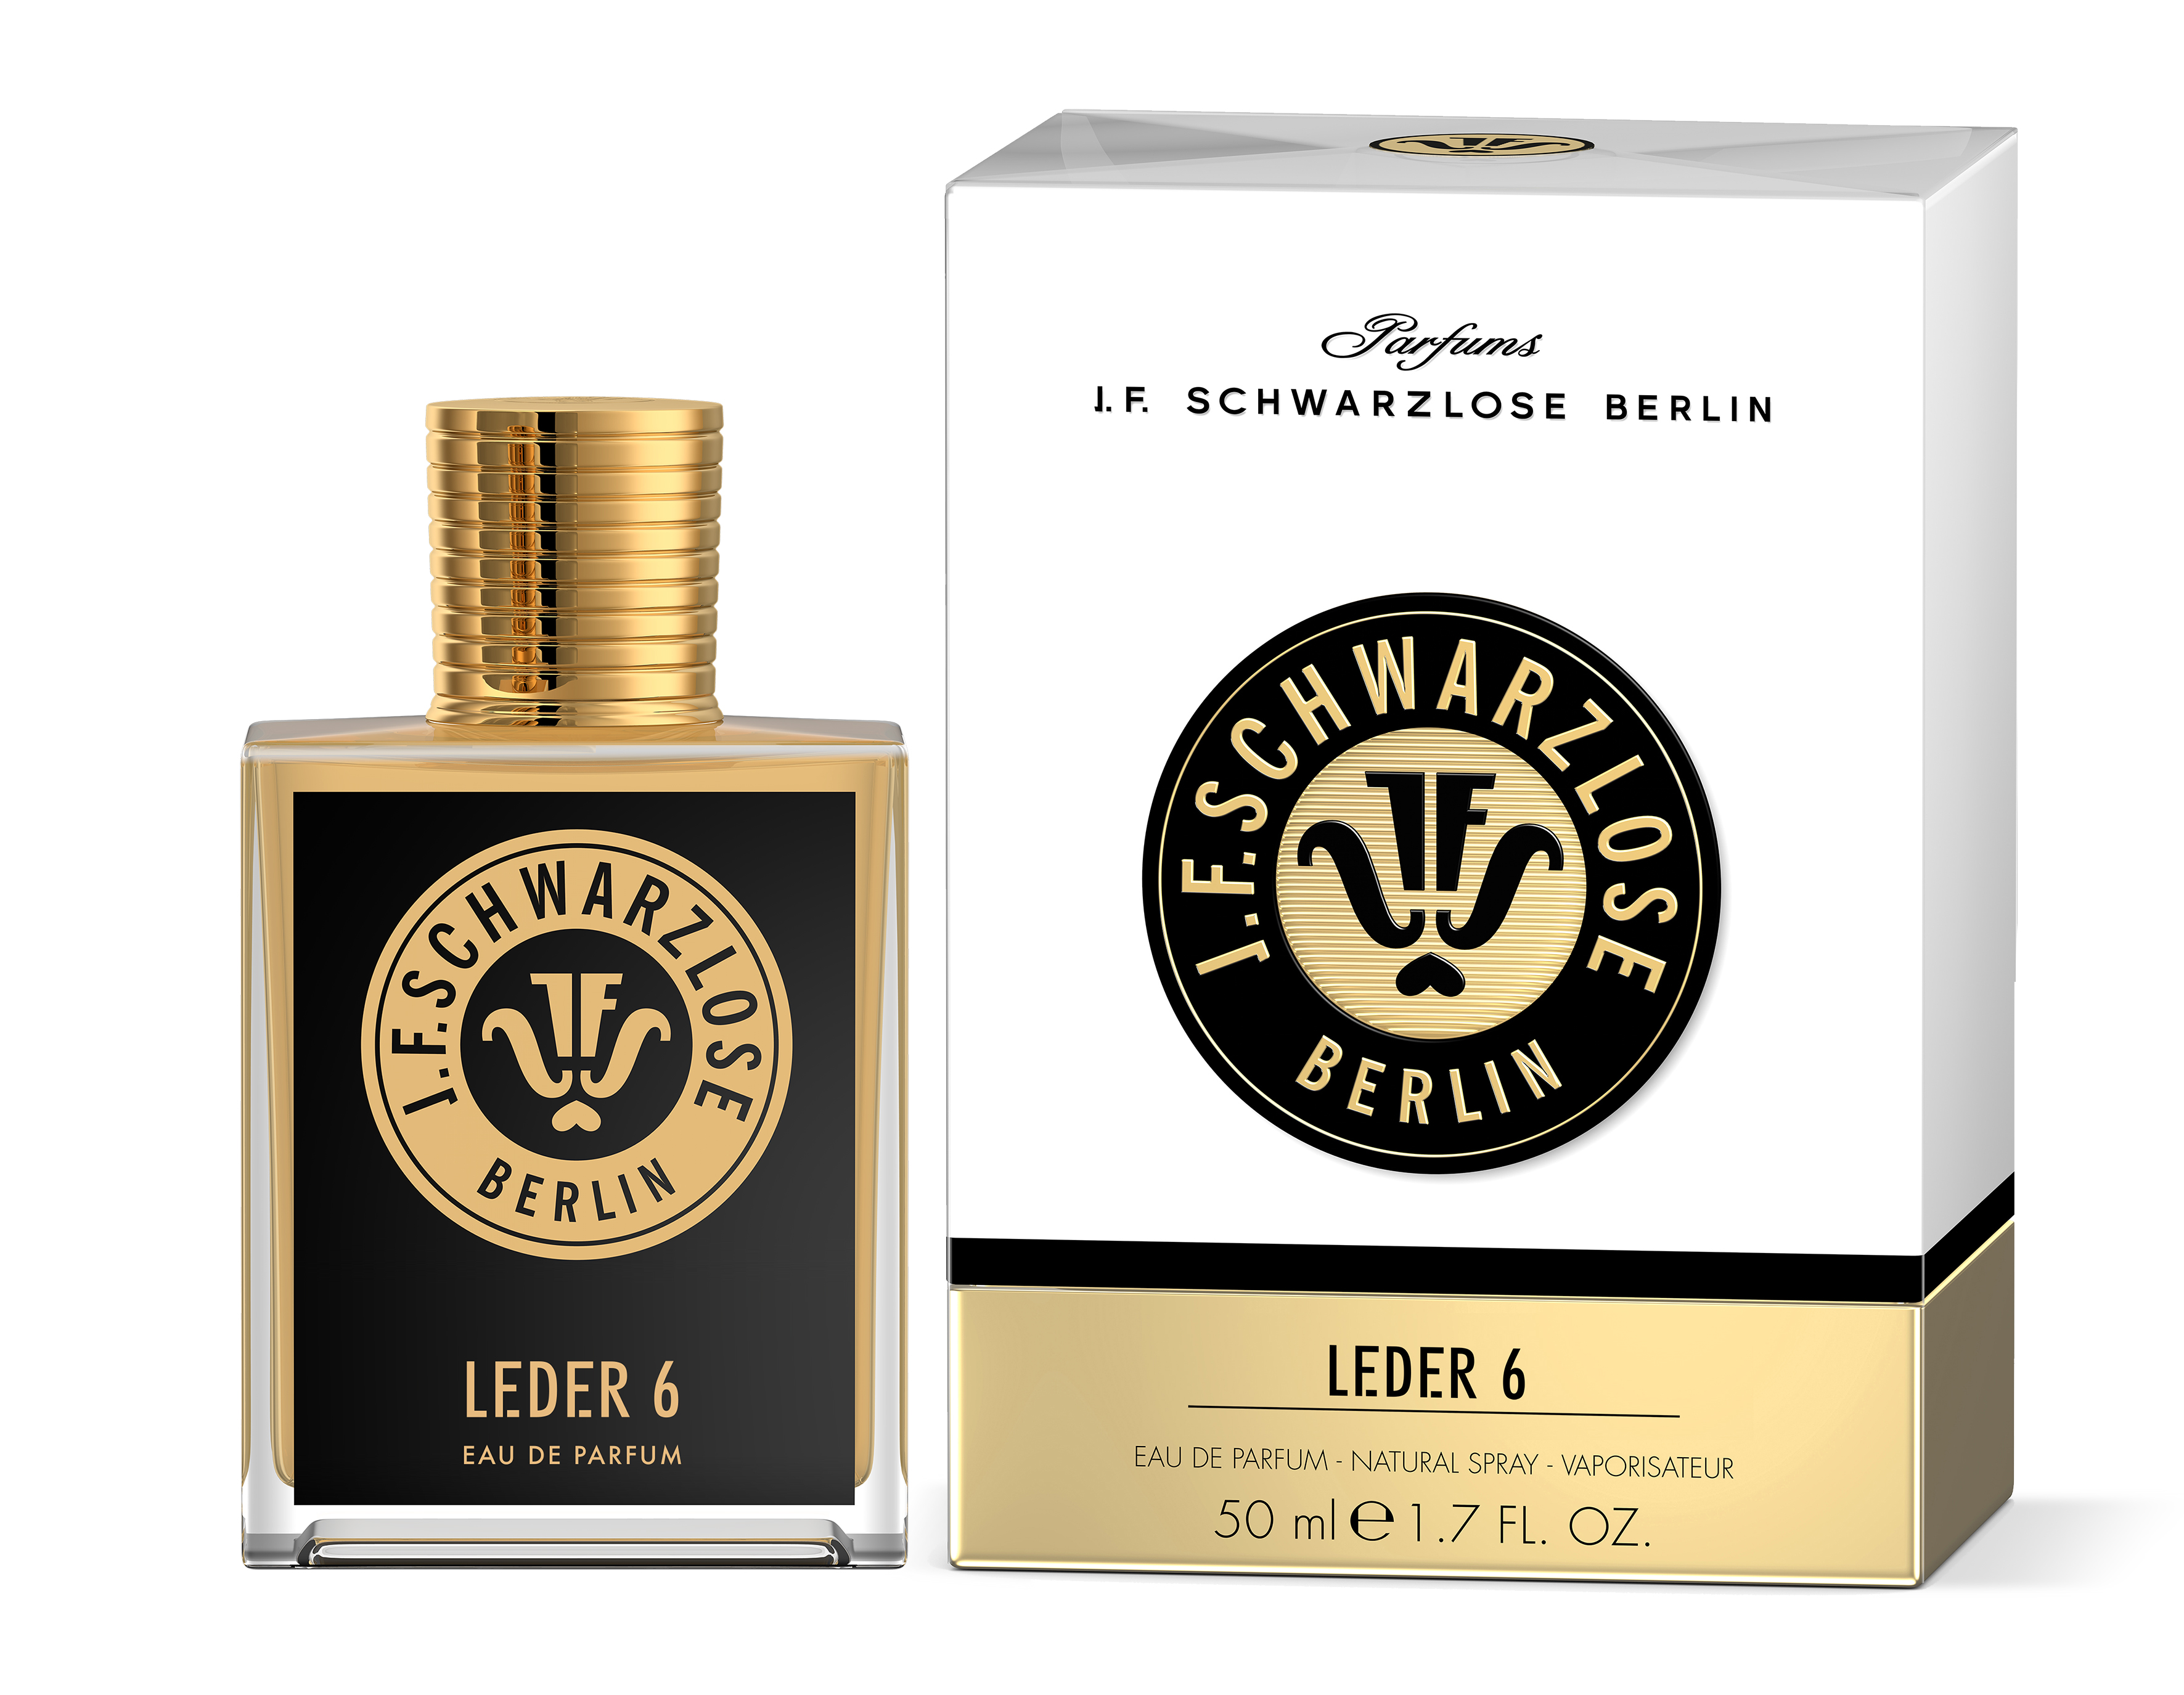 J.F. Schwarzlose Berlin LEDER 6 Eau de Parfum